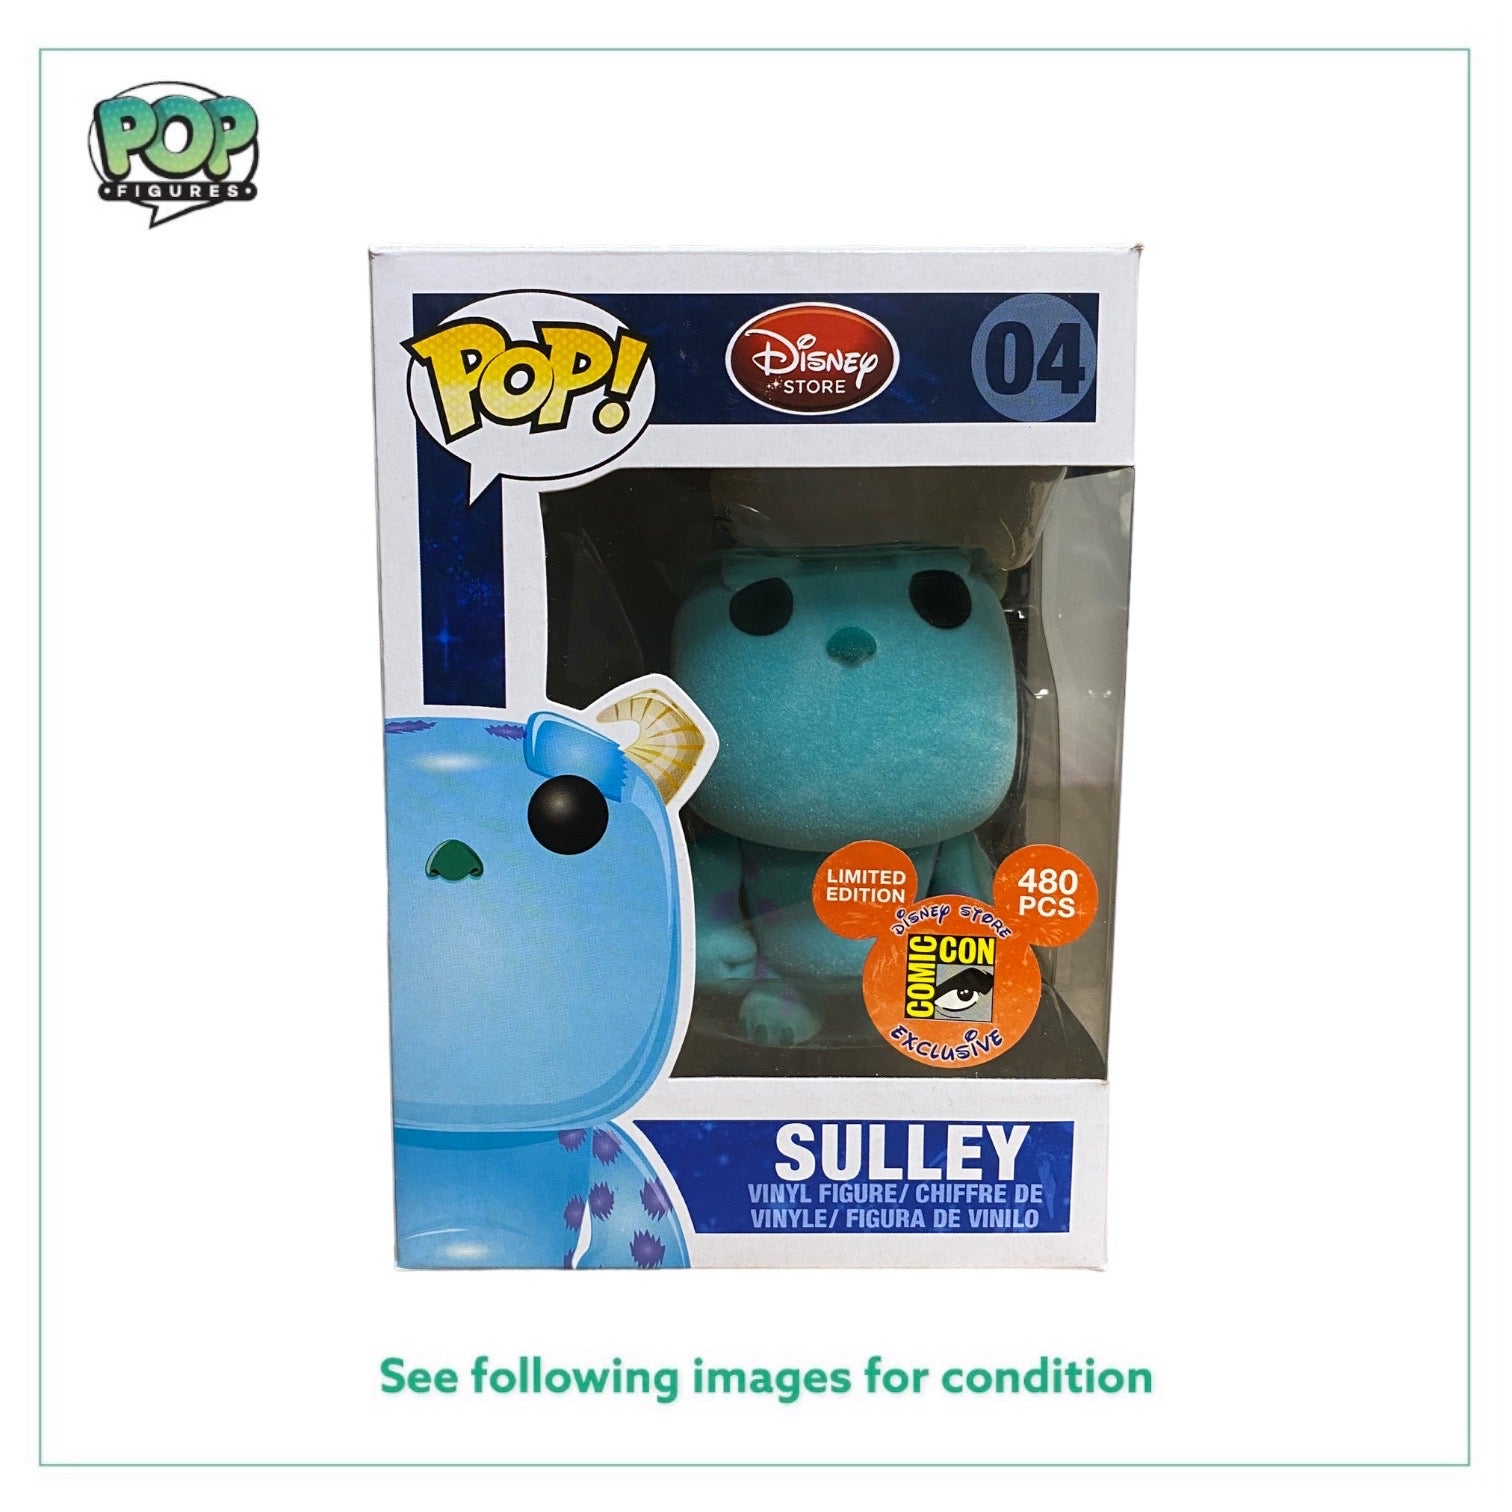 Sulley #04 (Flocked) Funko Pop! - Disney Series 1 - SDCC Disney Store Exclusive LE480 Pcs - Condition 8/10